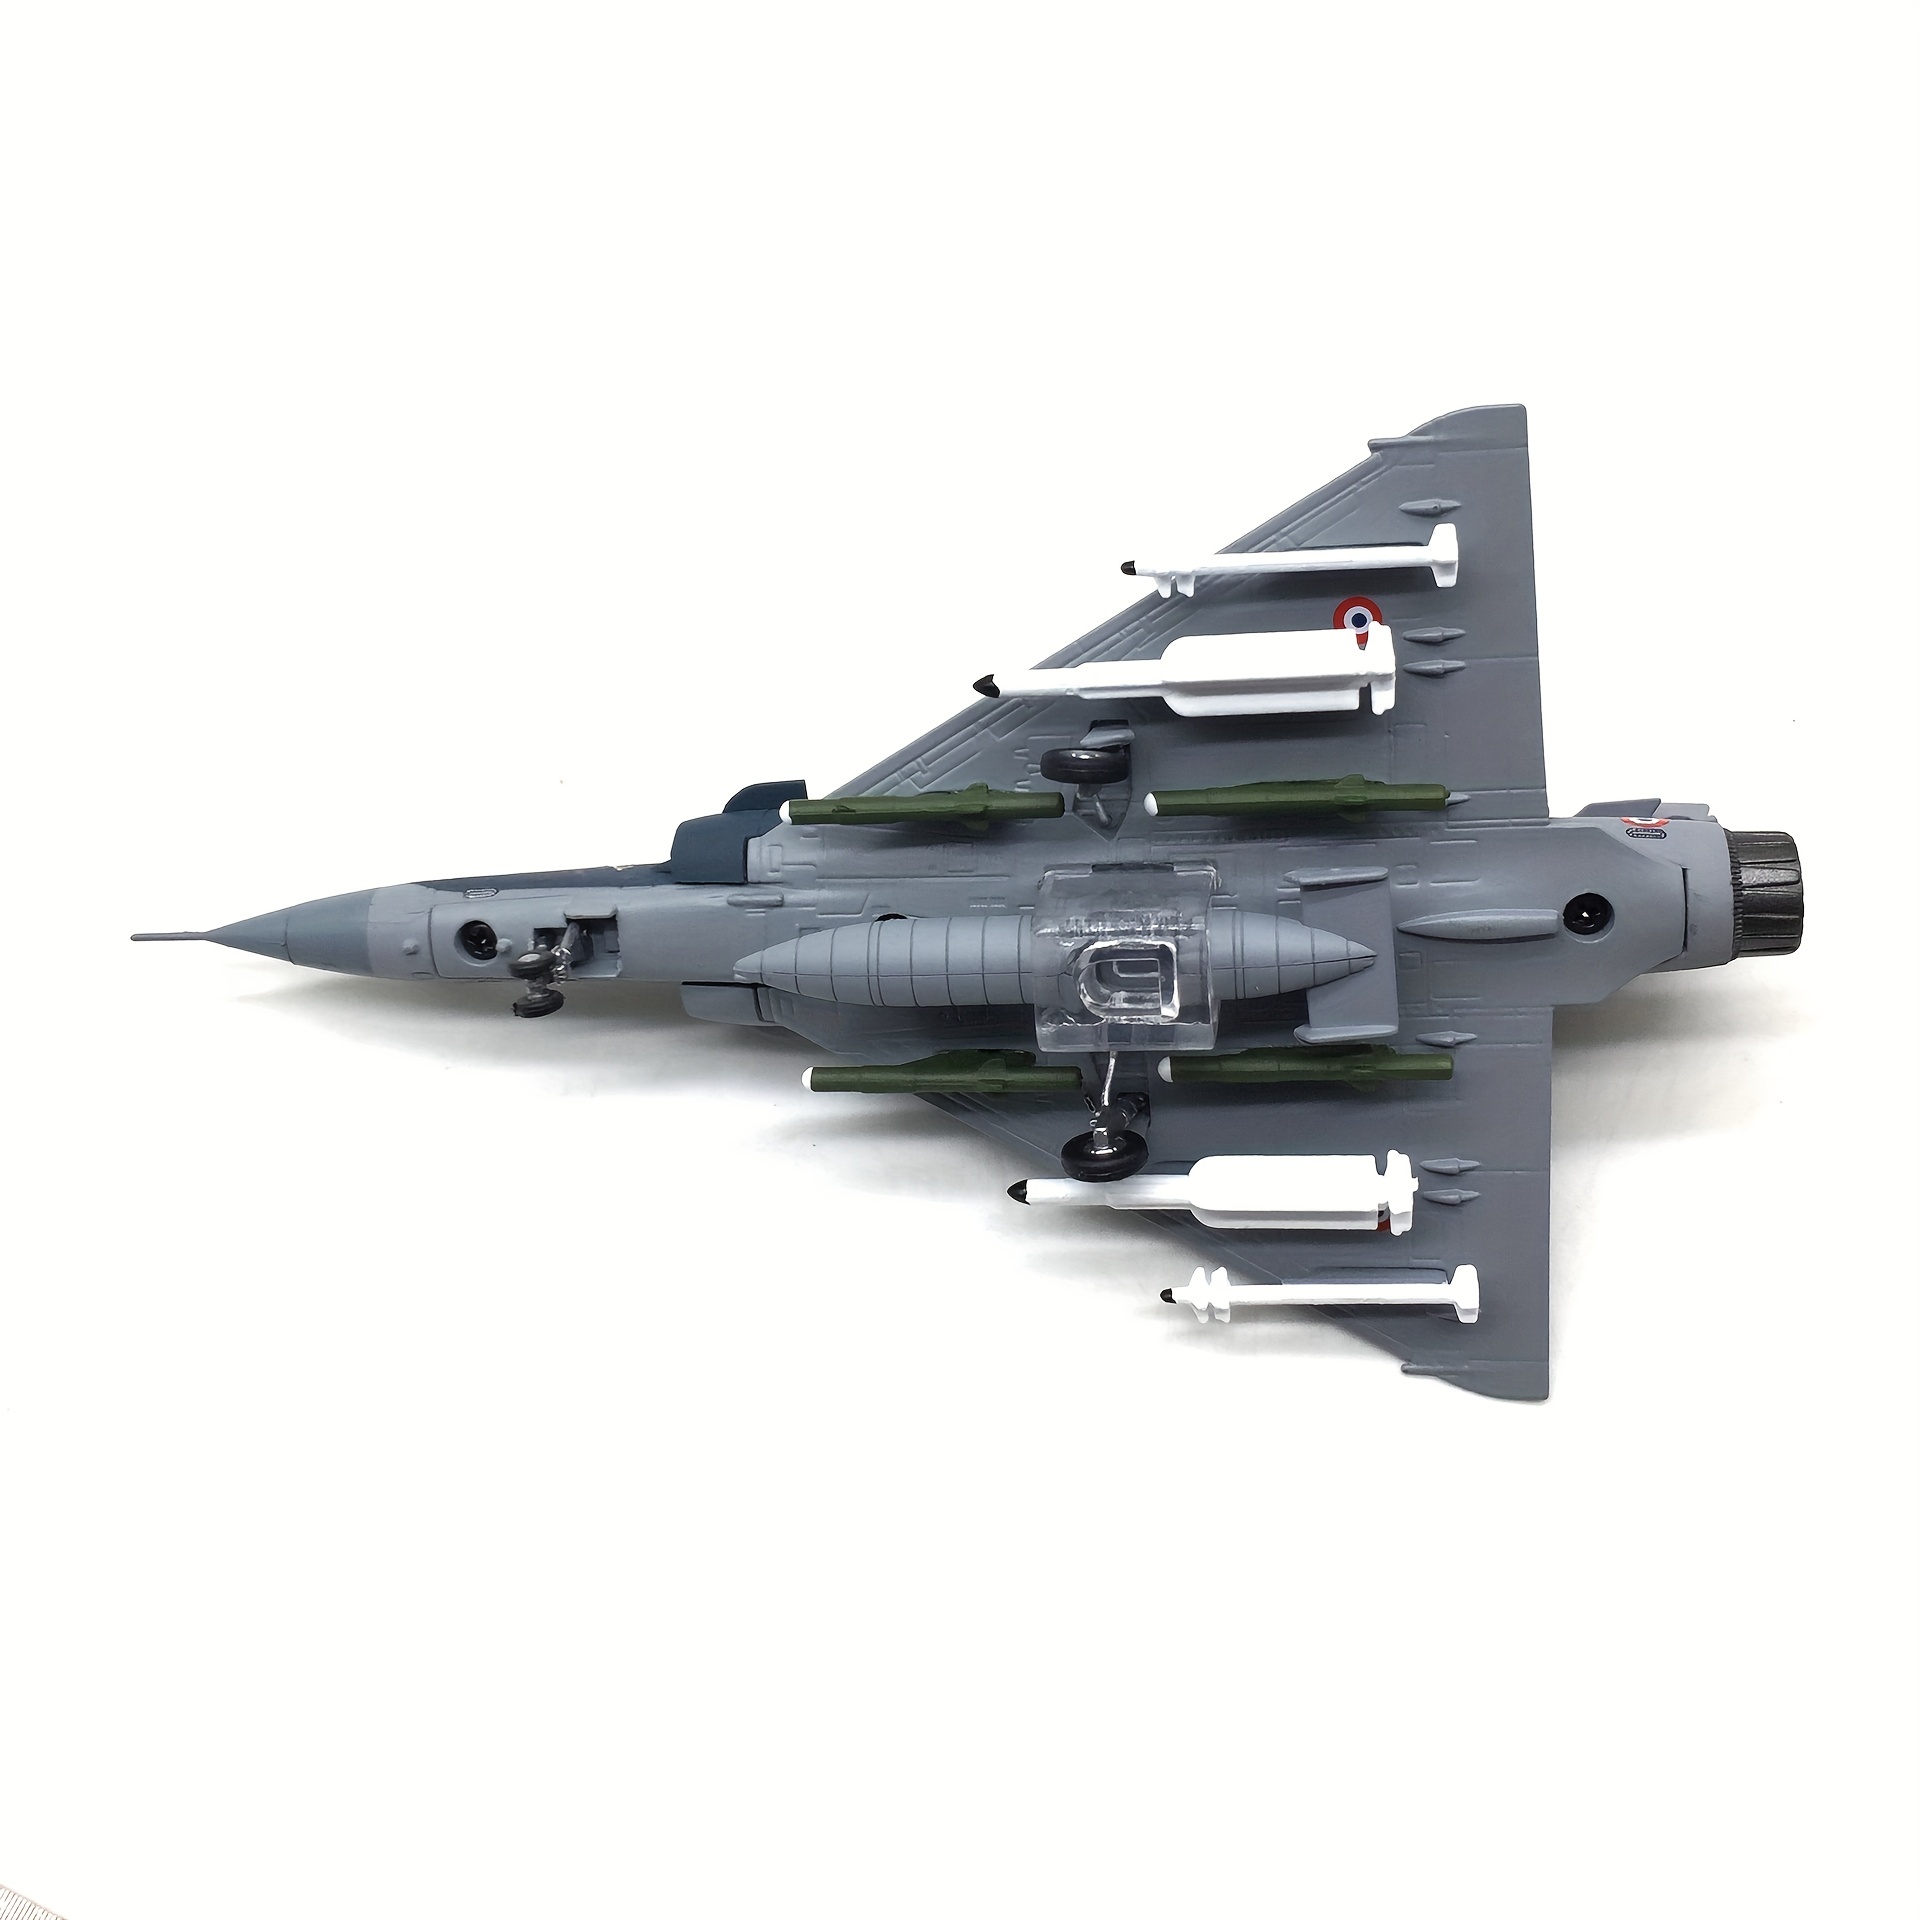 Dassault Mirage 2000 1/100 メタル飛行機模型キット スタンド付き